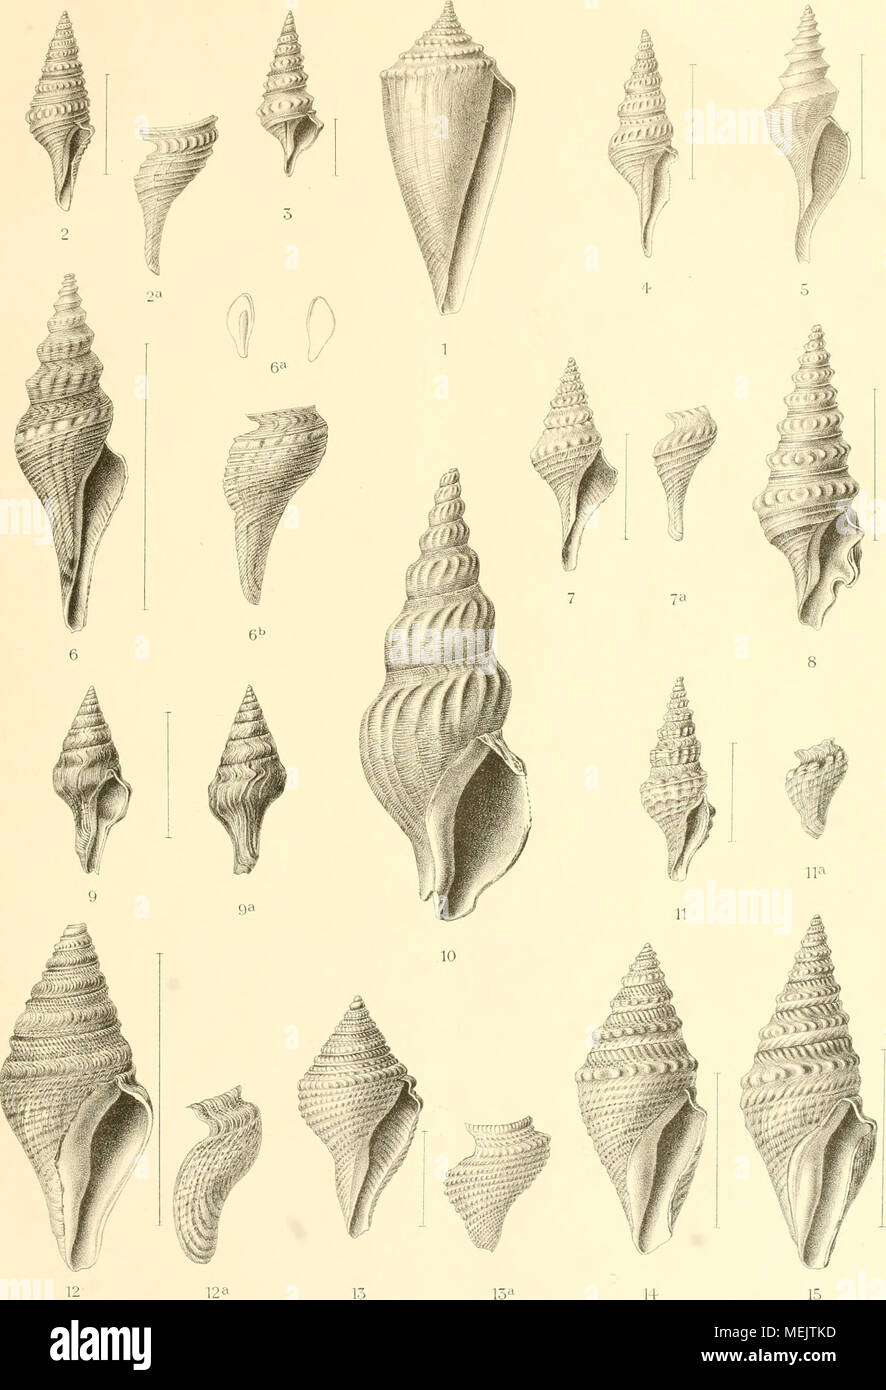 . Die beschalten Gasteropoden der deutschen Tiefsee-Expedition, 1898-1899 . .- y ^j.ir^icpj. &gt;jiz Tflf 7 ^!th .-.r::t:'''.^'tr-st-itiuiUi: rraJunin'''J': 1. Conus torquatus. — 2. Pleurotoma gemmulina. — 3. PL rotatilis. — 4. Surcula exstructa. — 5. Leucosyrinx crispulata. — 6. Surcula circumstricta. — 7. Brachytoma subsuturalis. — 8. Drillia bisinuata. — 9. Clavatula subspirata. 10. Pontothatima Chuni. — 11. Drillia sesquitertia. — 12. Genota atractoides. — 13. G. bitorquata. — 14. G. fissa. 15. G. atractoides v. aethiopica. Verlag von Gujtdv Fischer m Jena.. Stock Photo